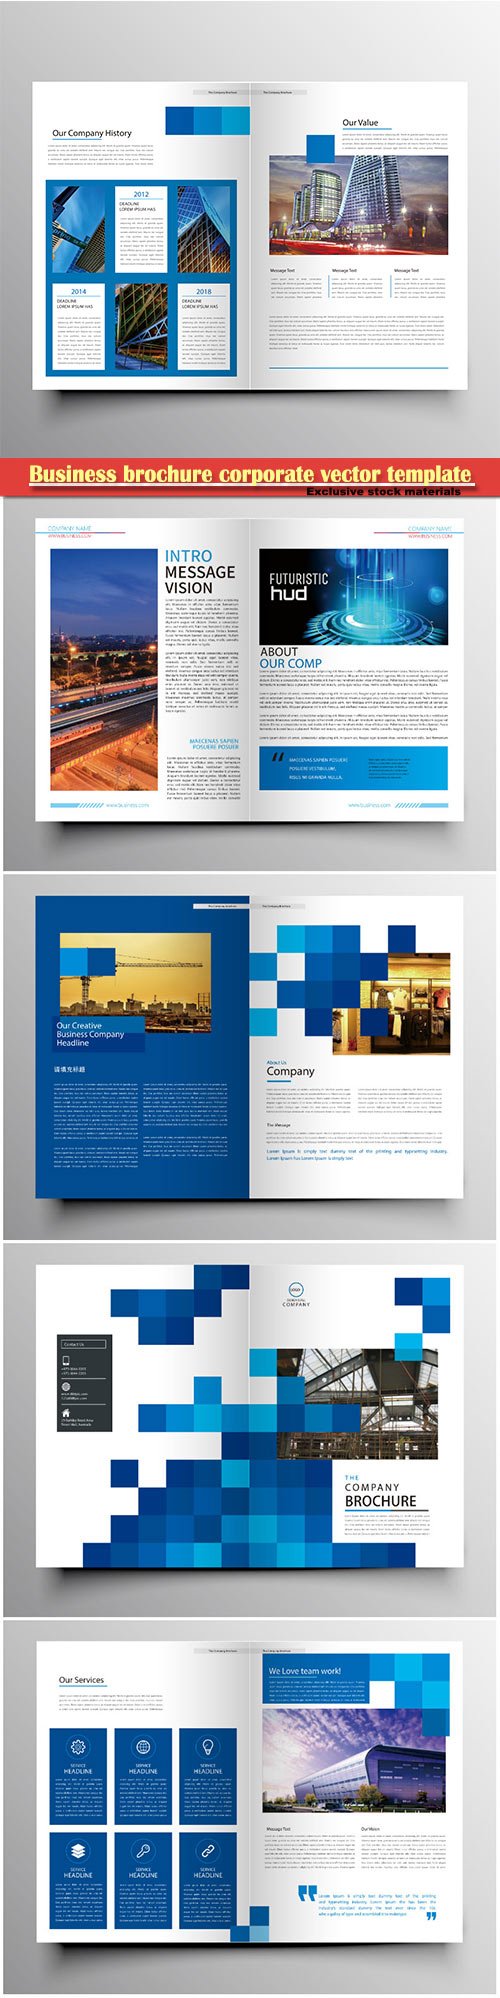 Business brochure corporate vector template # 41